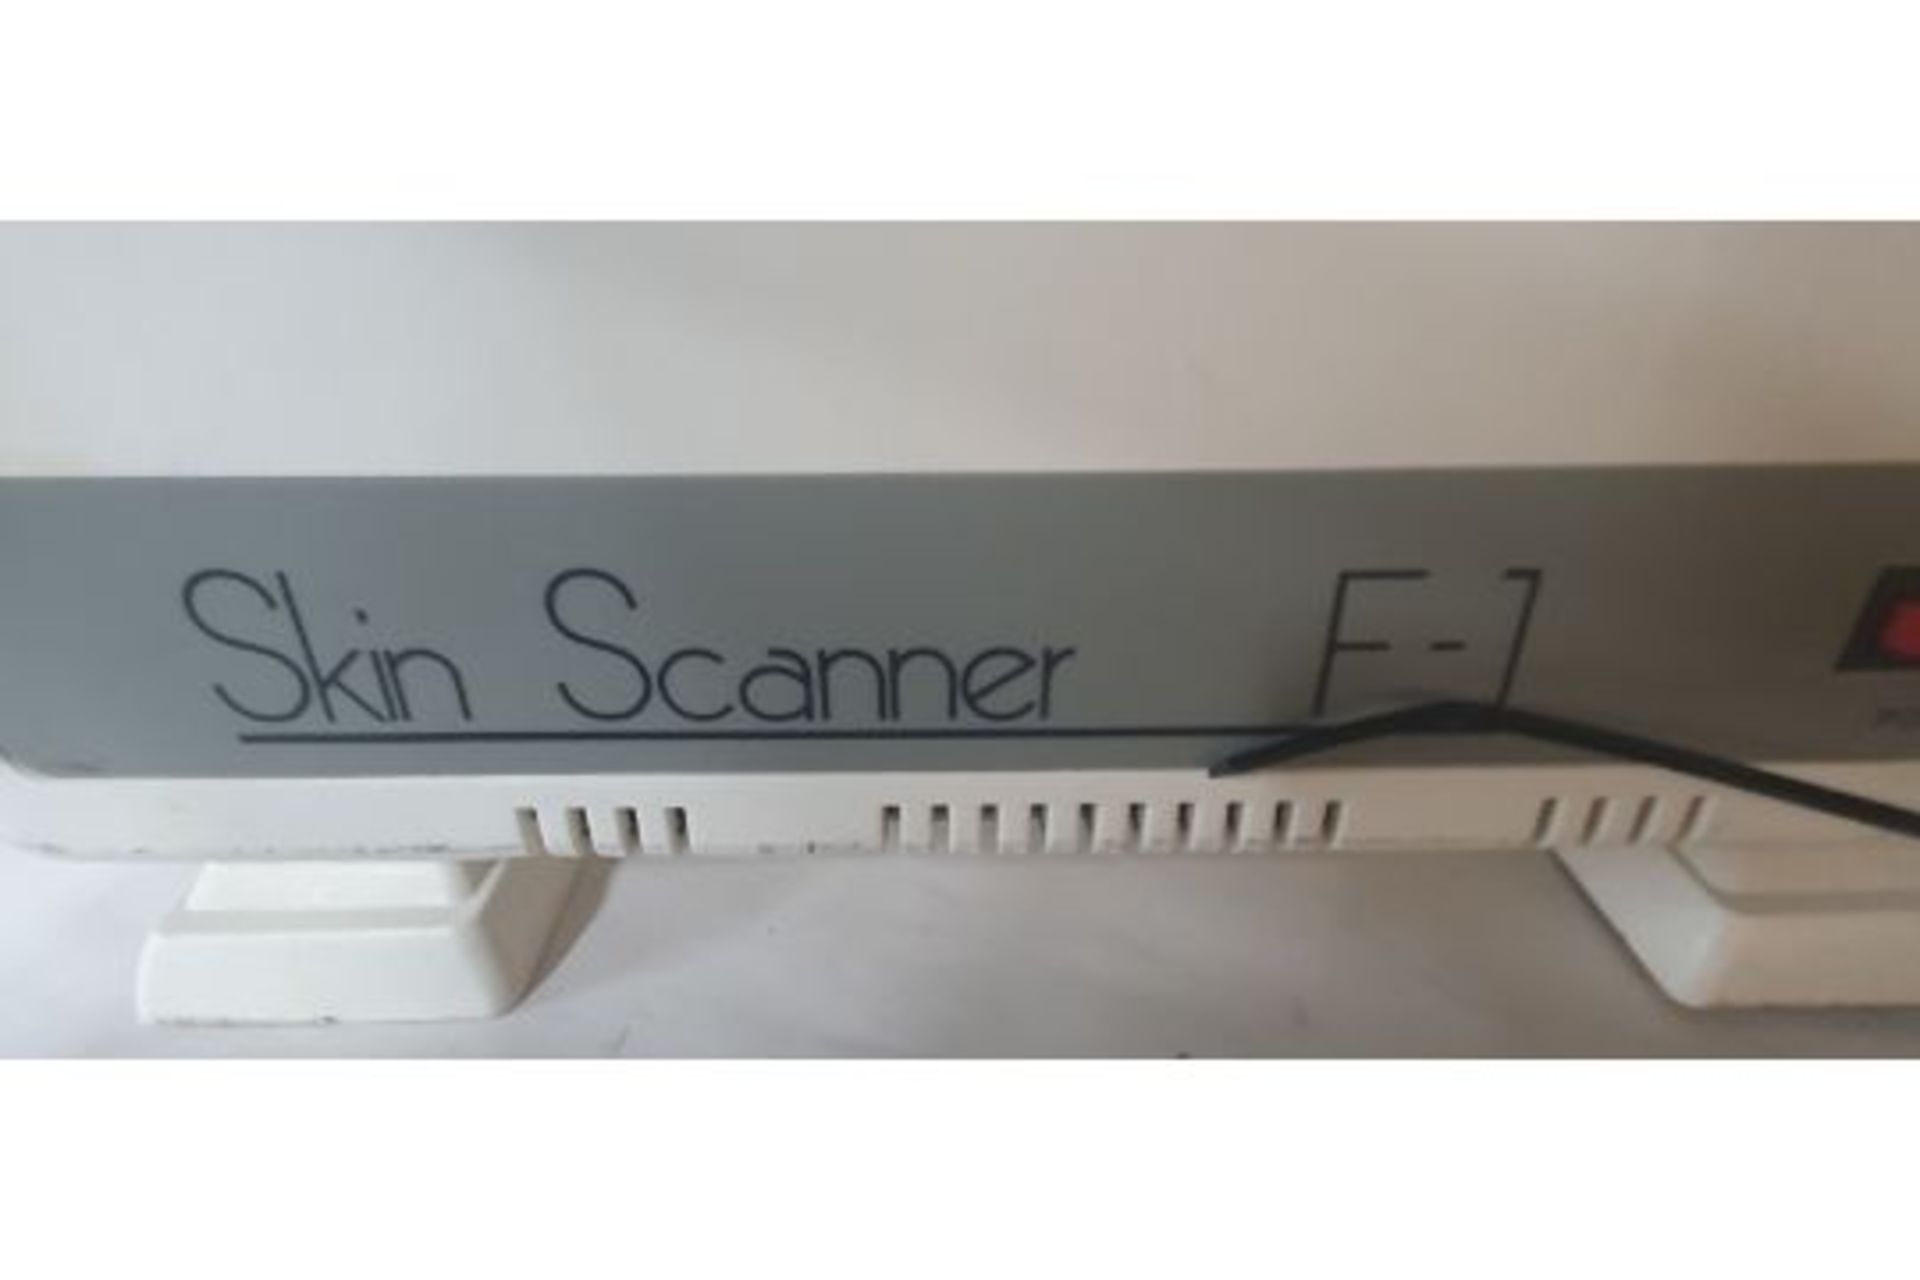 Paragon F-1 Skin Scanner - Image 3 of 3